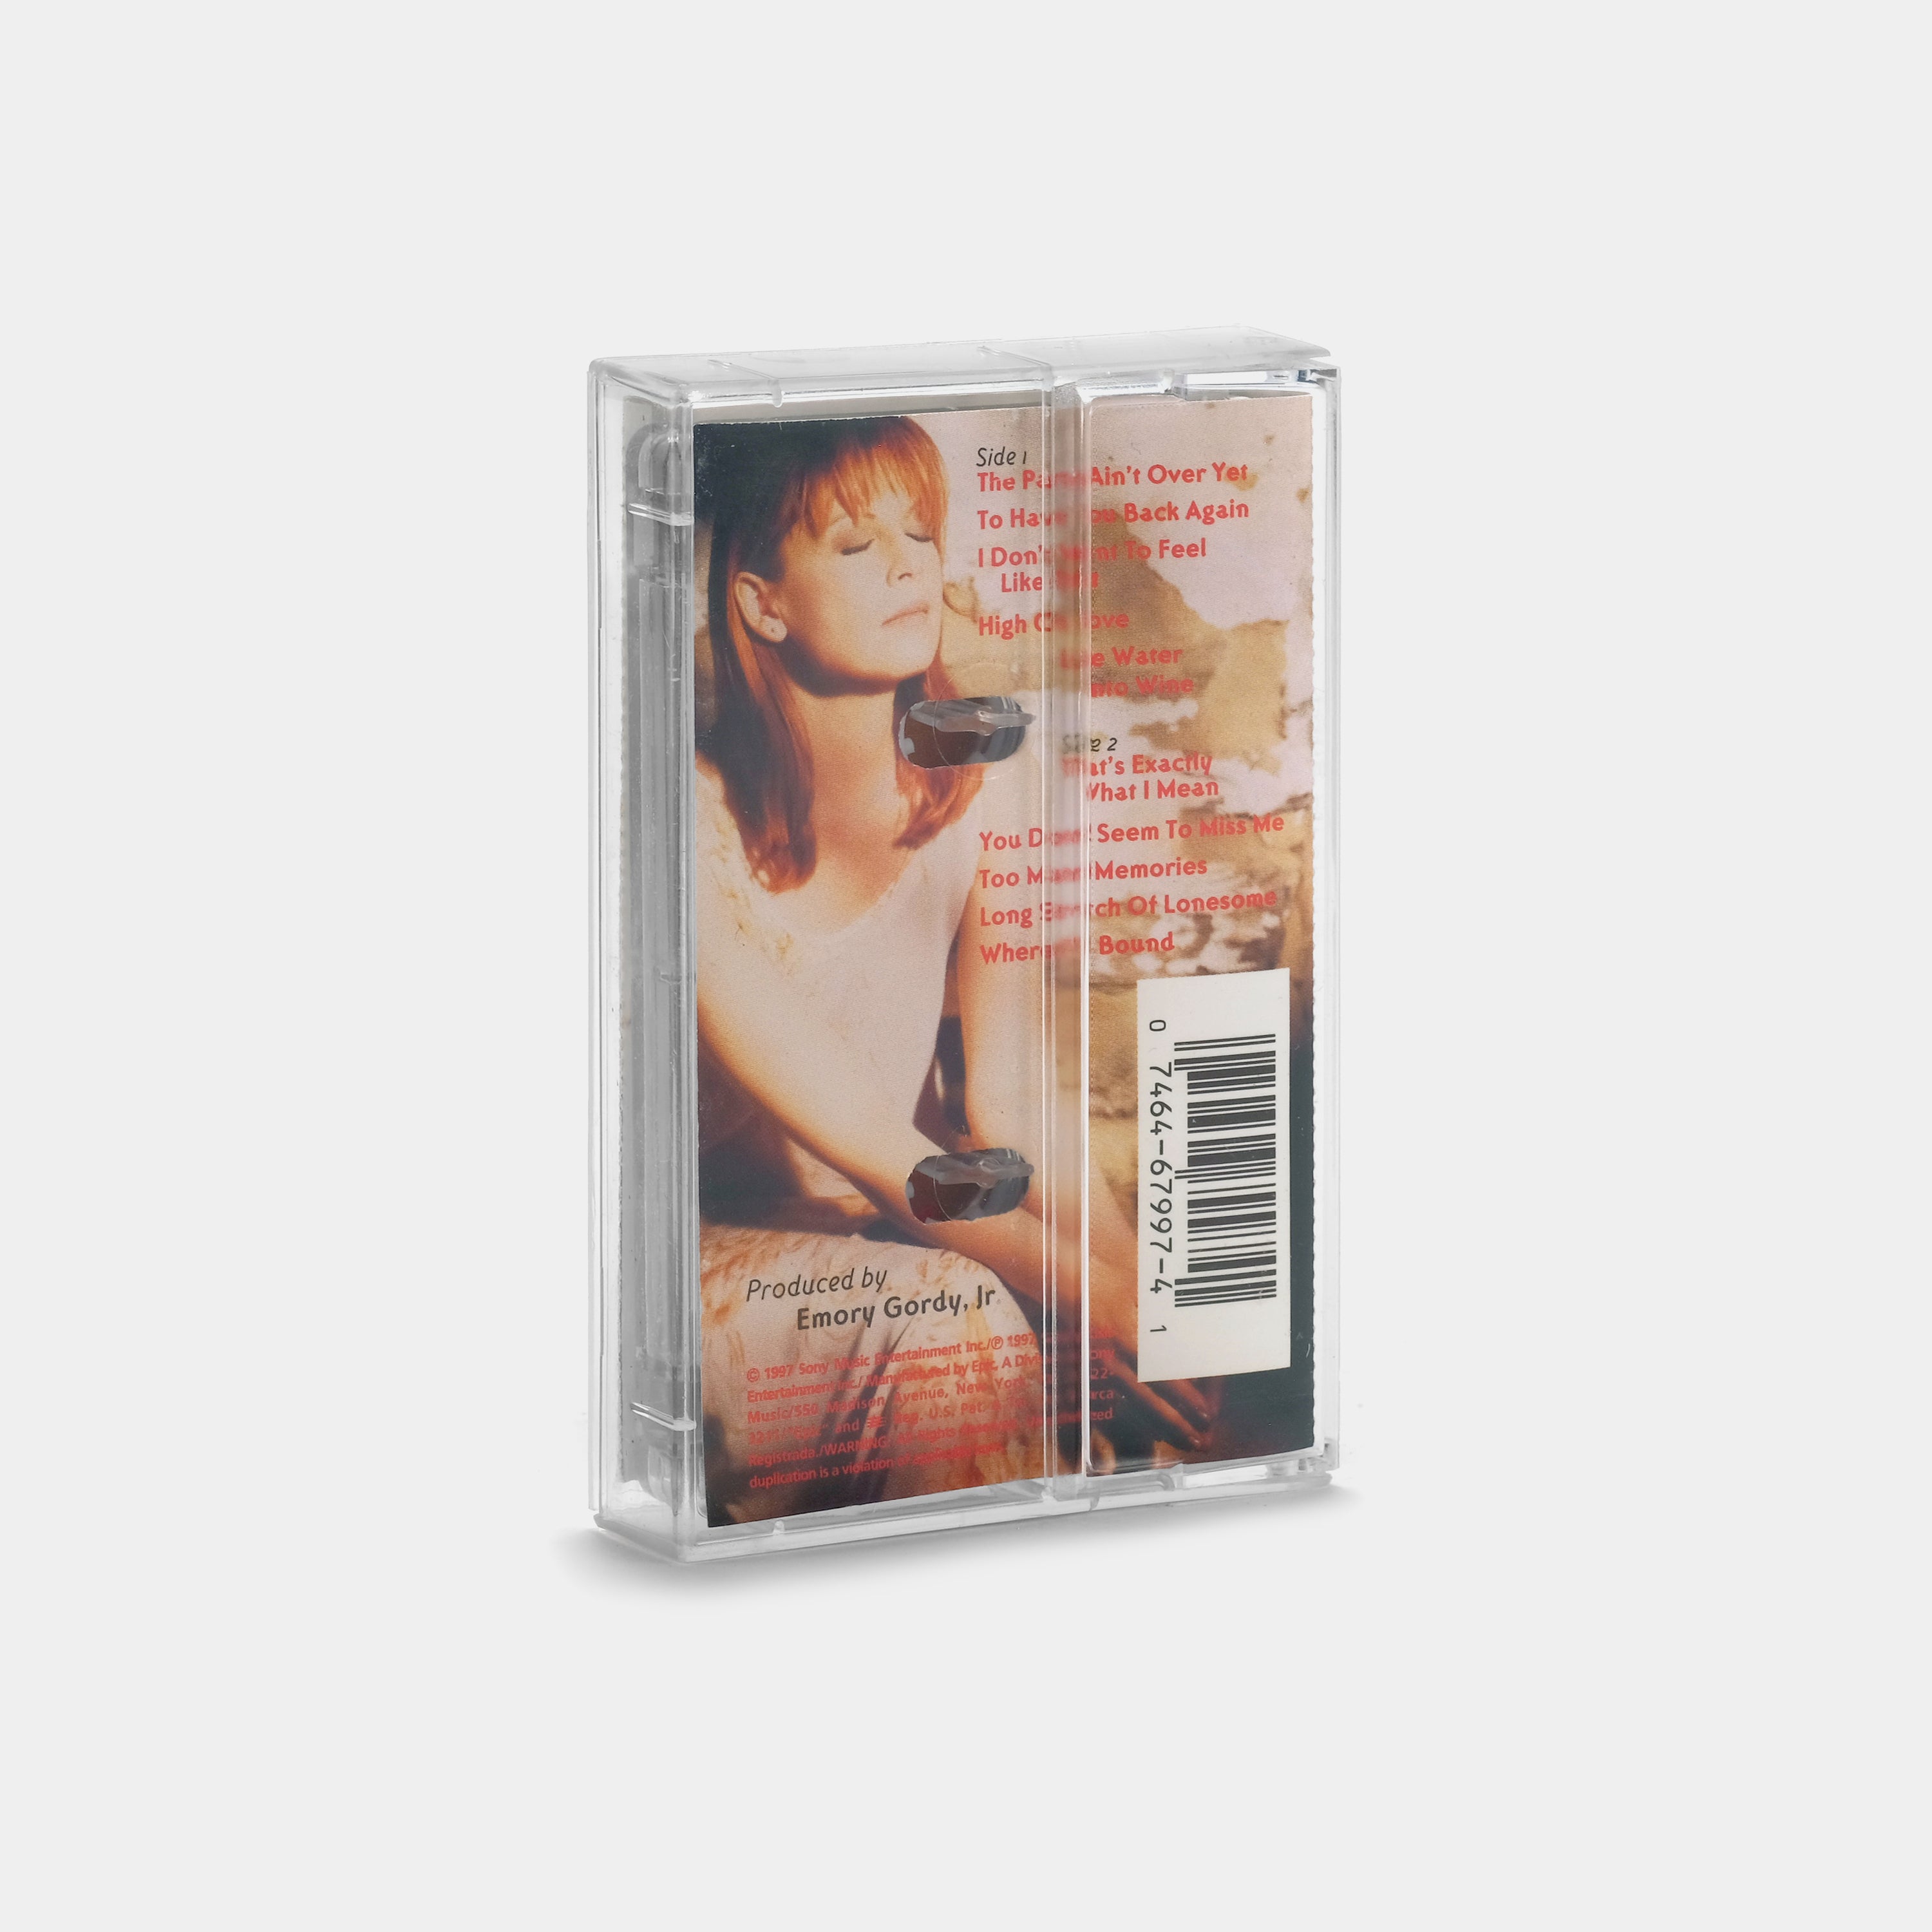 Patty Loveless - Long Stretch of Lonesome Cassette Tape